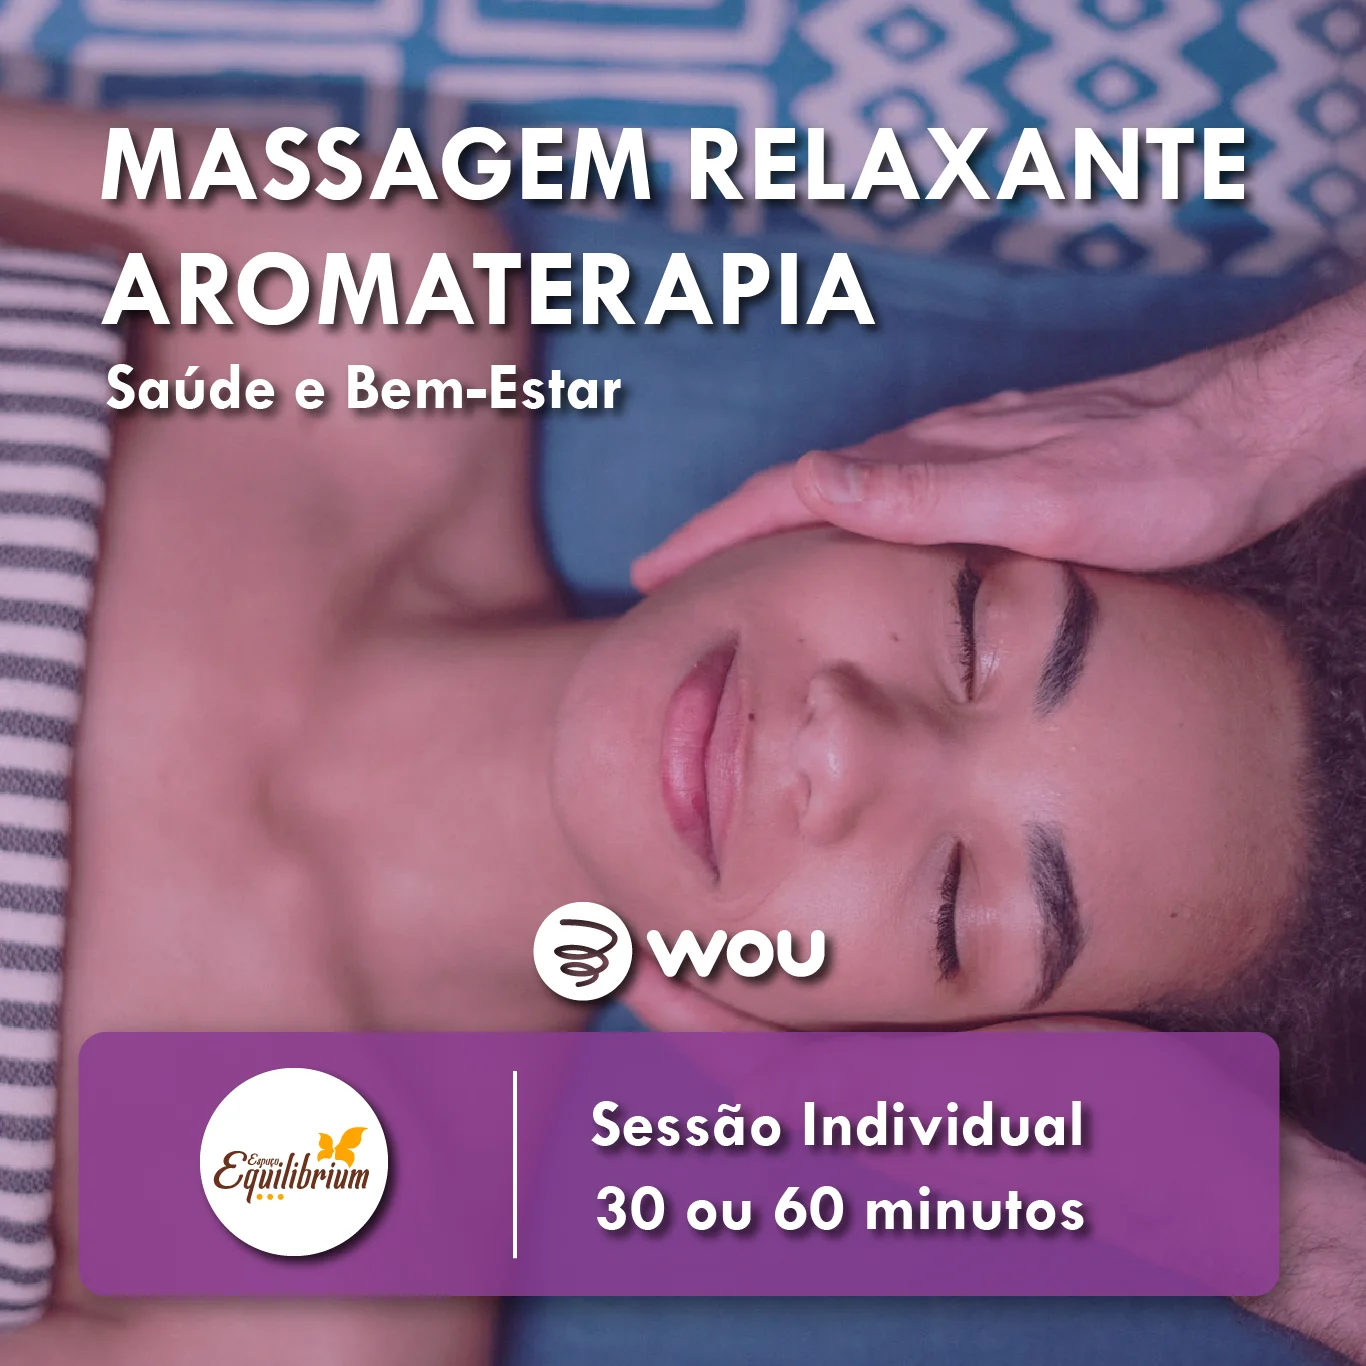 Massagem Relaxante Aromaterapia em Ilhavo